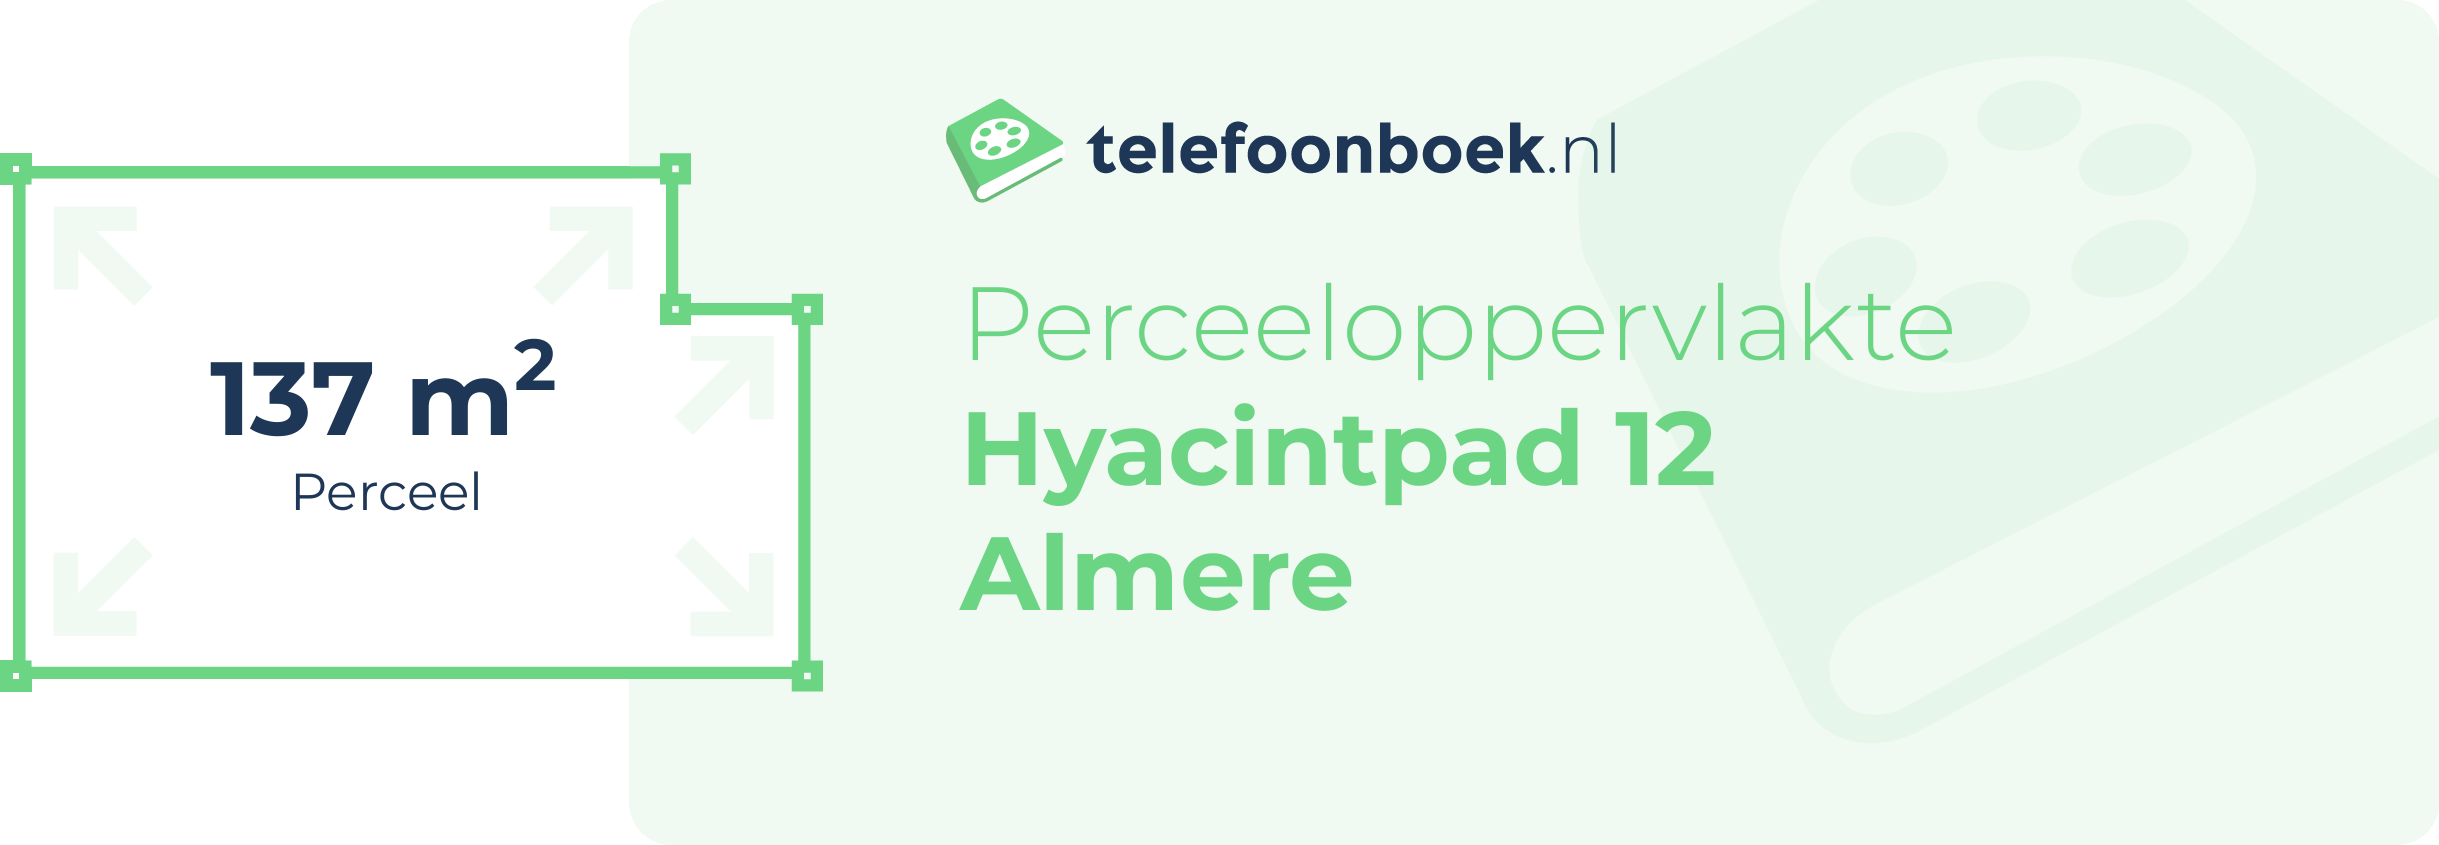 Perceeloppervlakte Hyacintpad 12 Almere